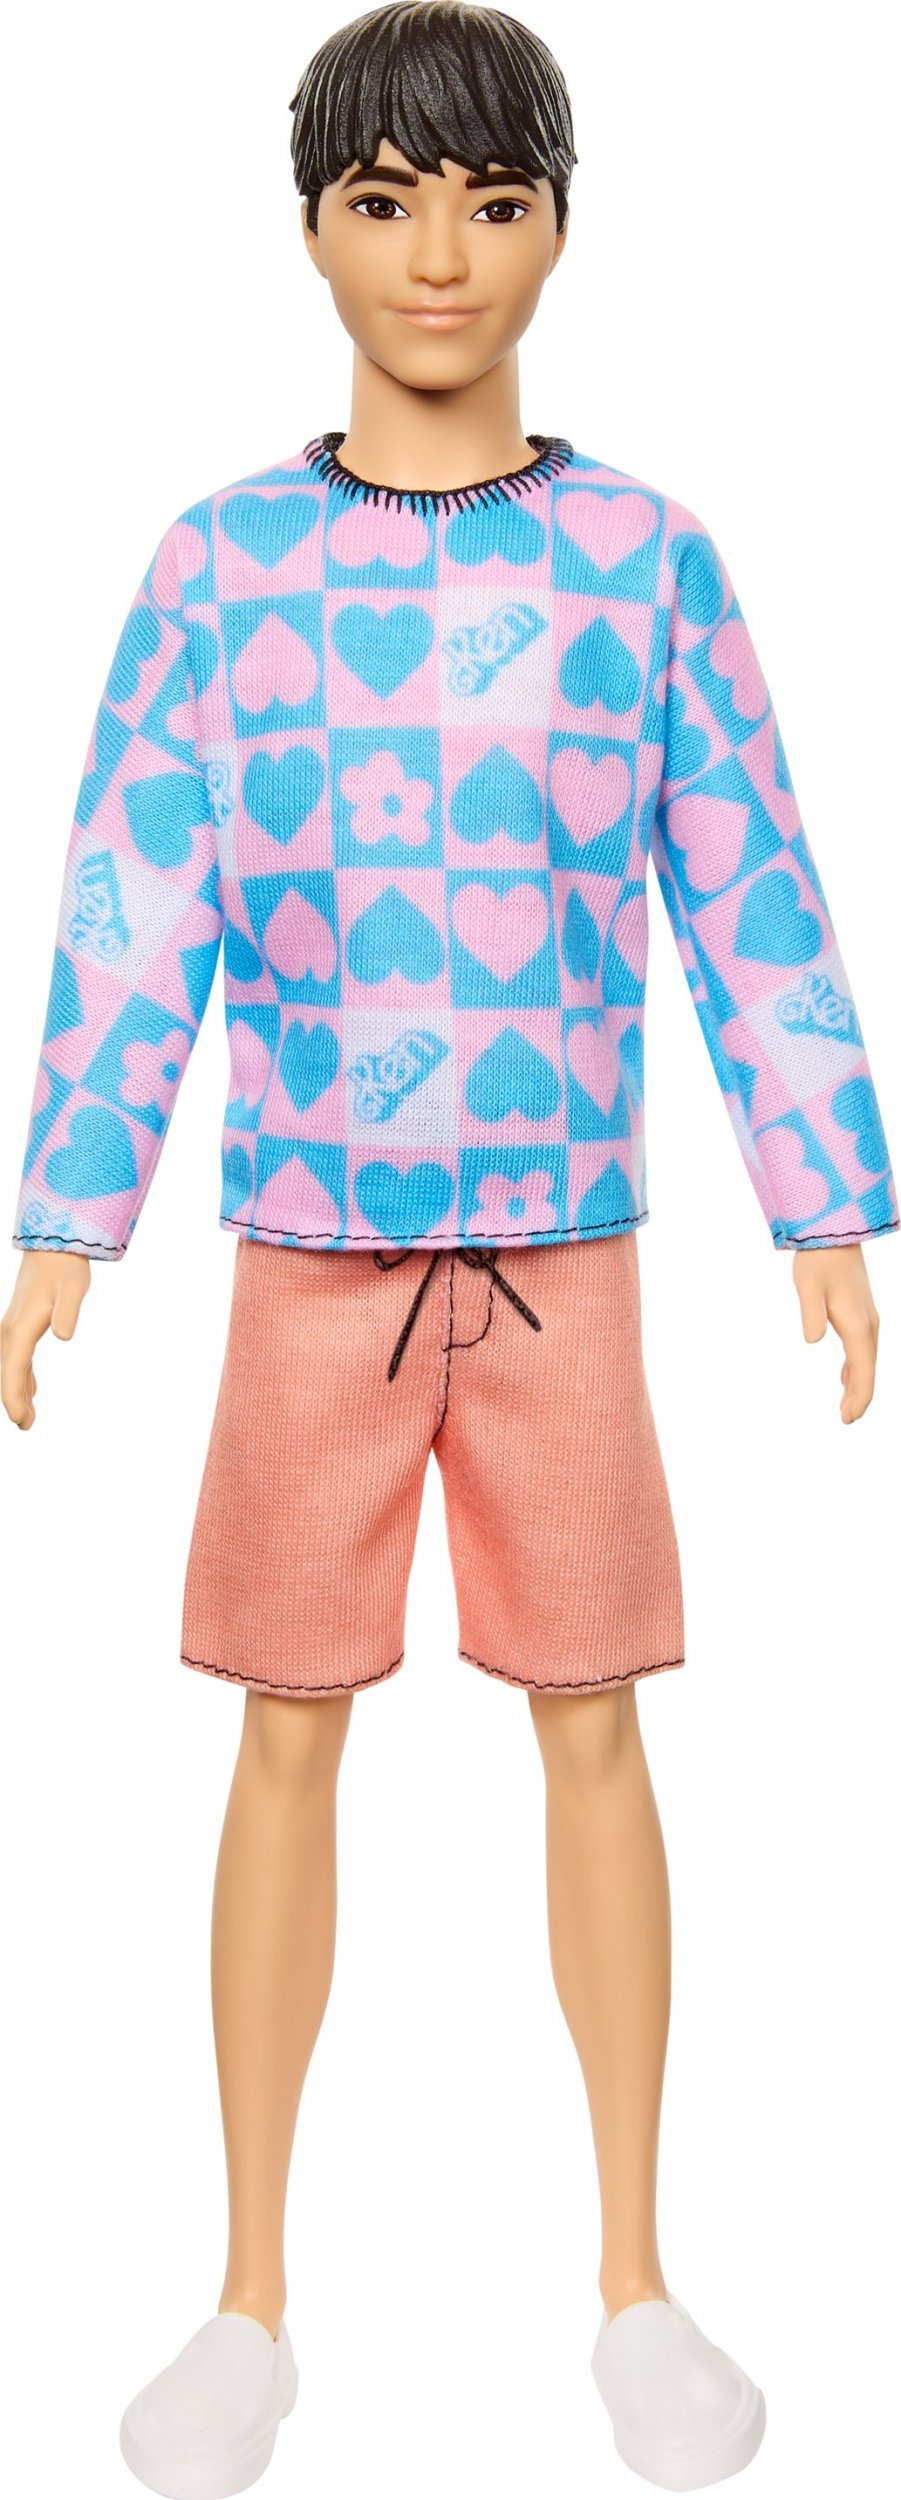 Lalka Barbie Mattel Fashionistas Ken Lalka #219 (HRH24)